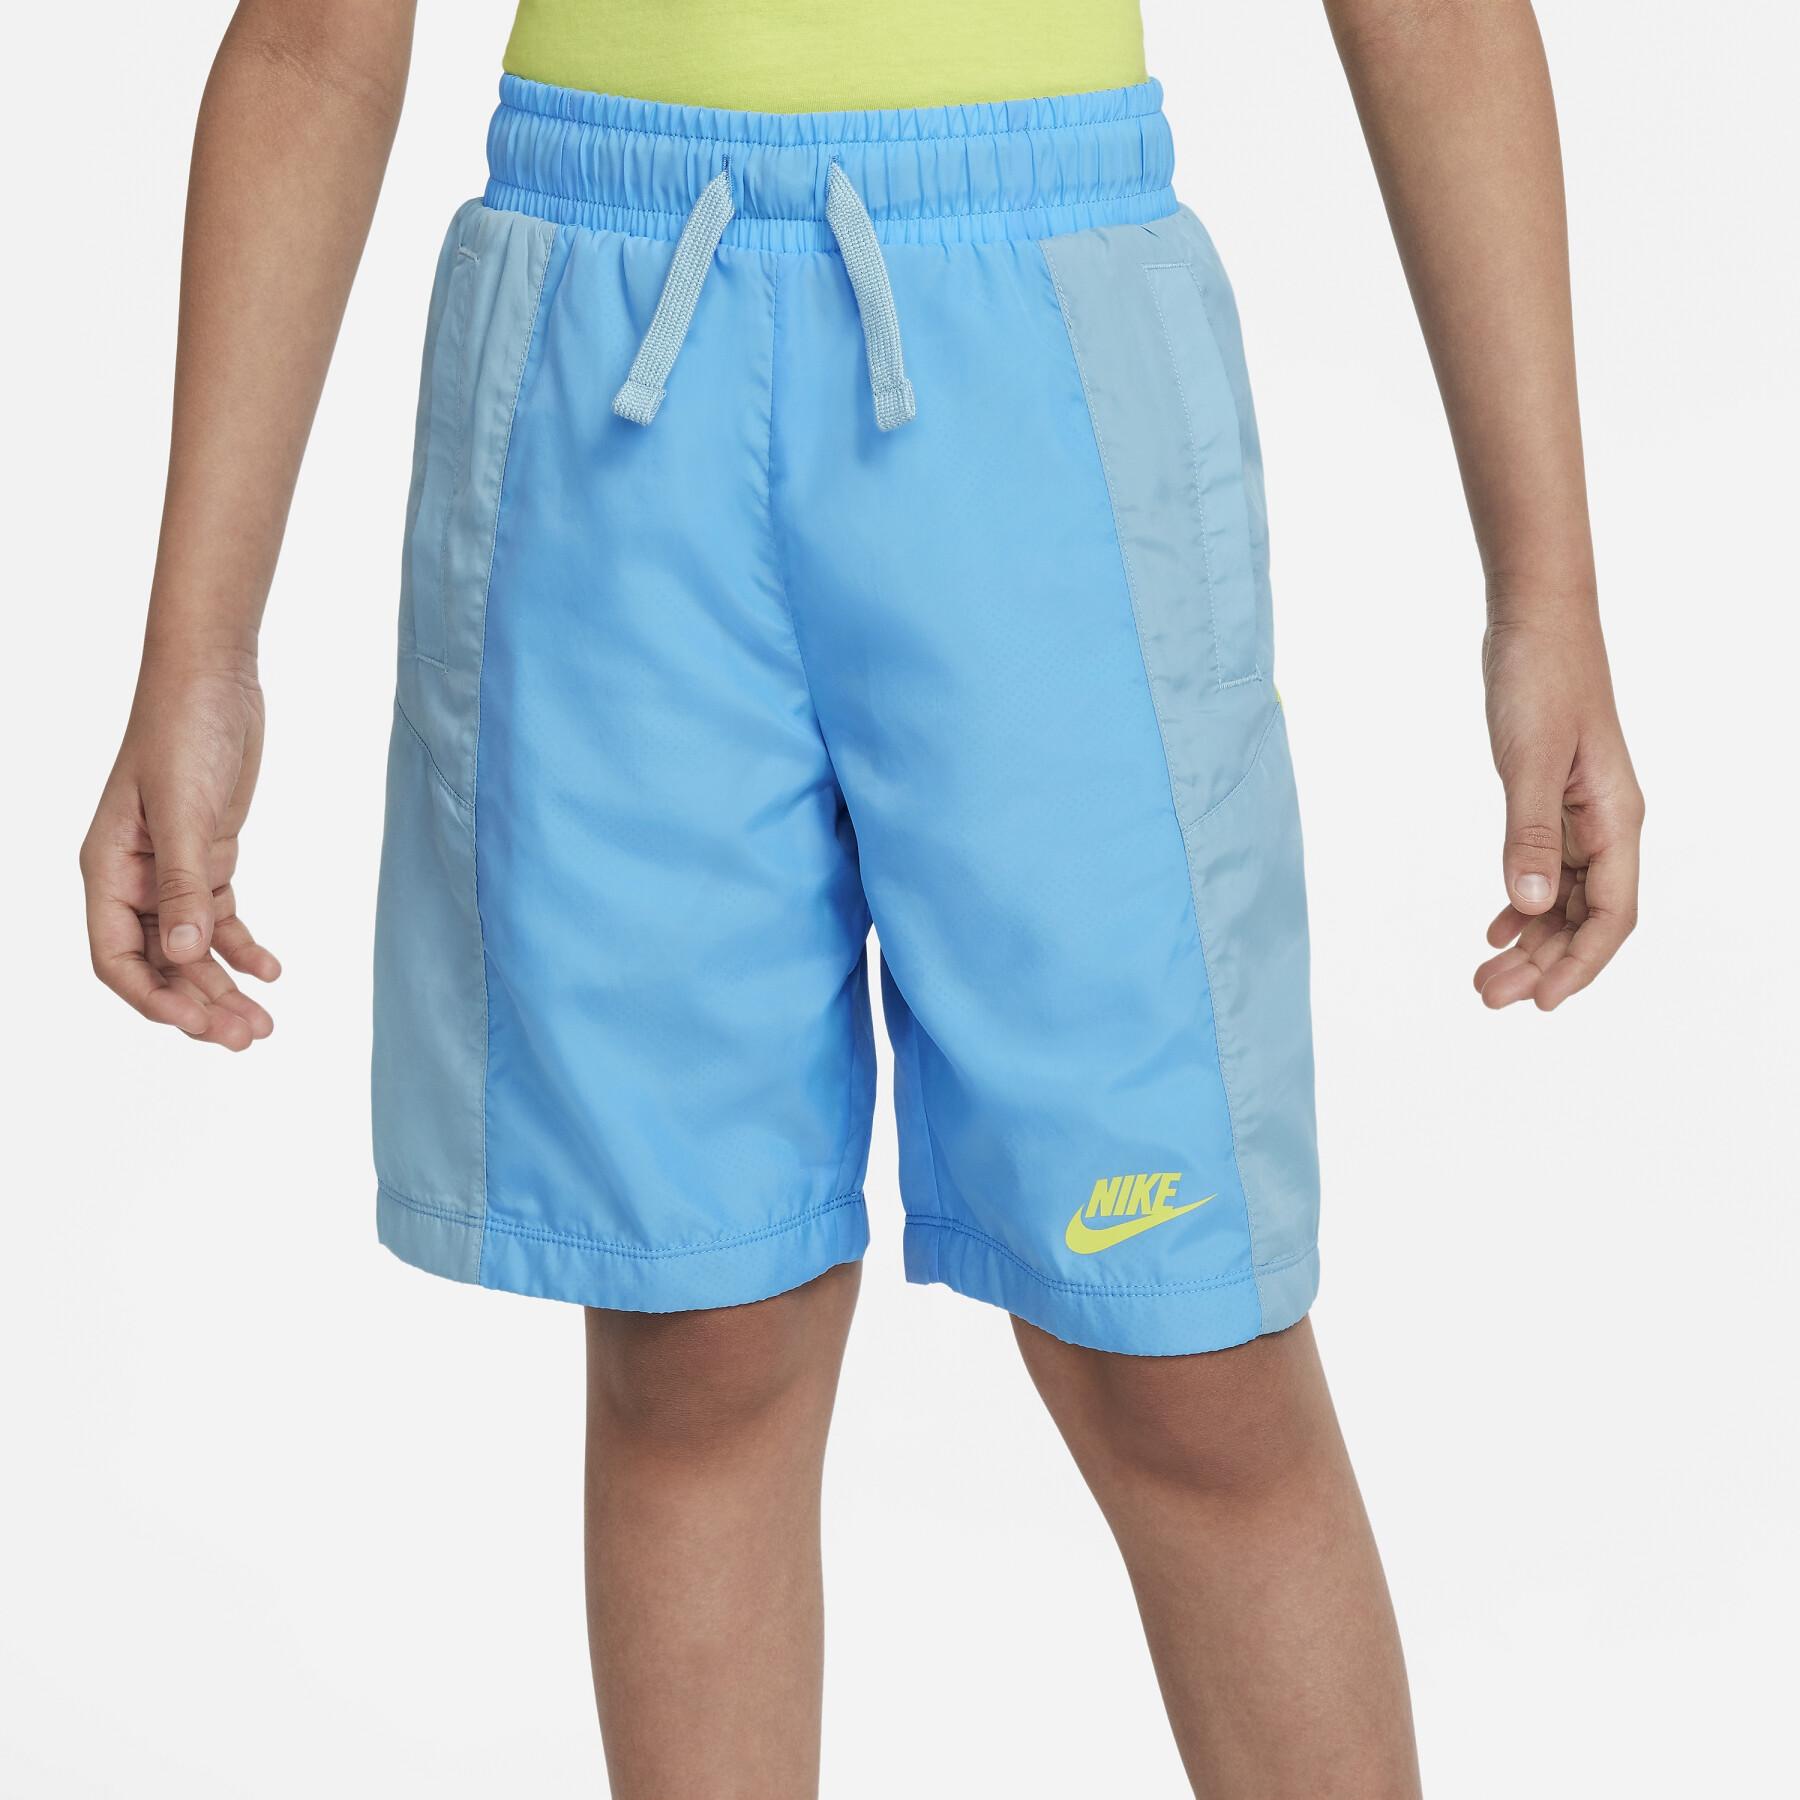 Shorts für Kinder Nike Amplify